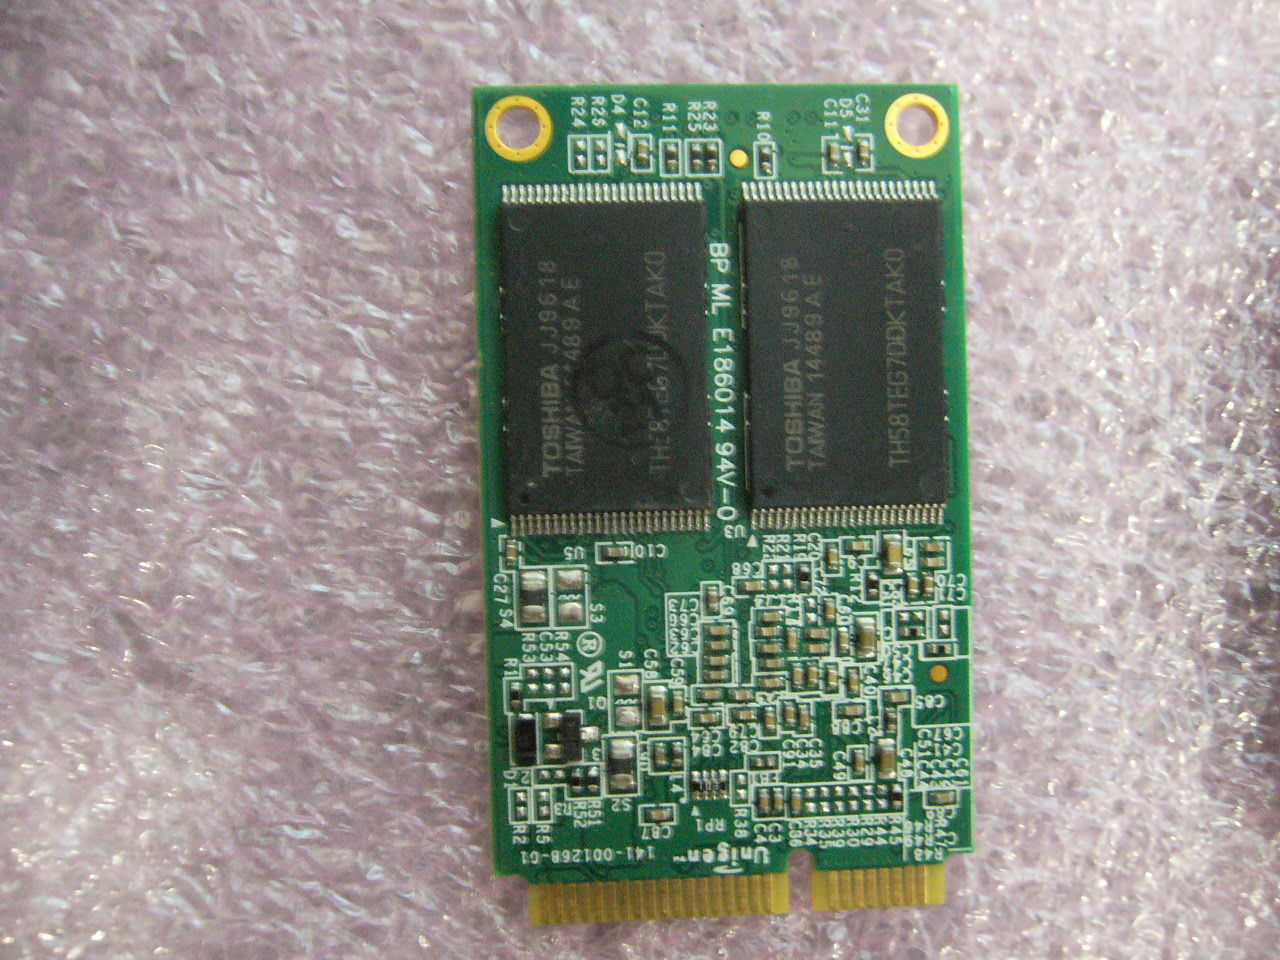 QTY 1x Unigen 50GB SSD UBA2PHE50H0IM1-DTE-CKD mSATA Solid State Drive - Click Image to Close